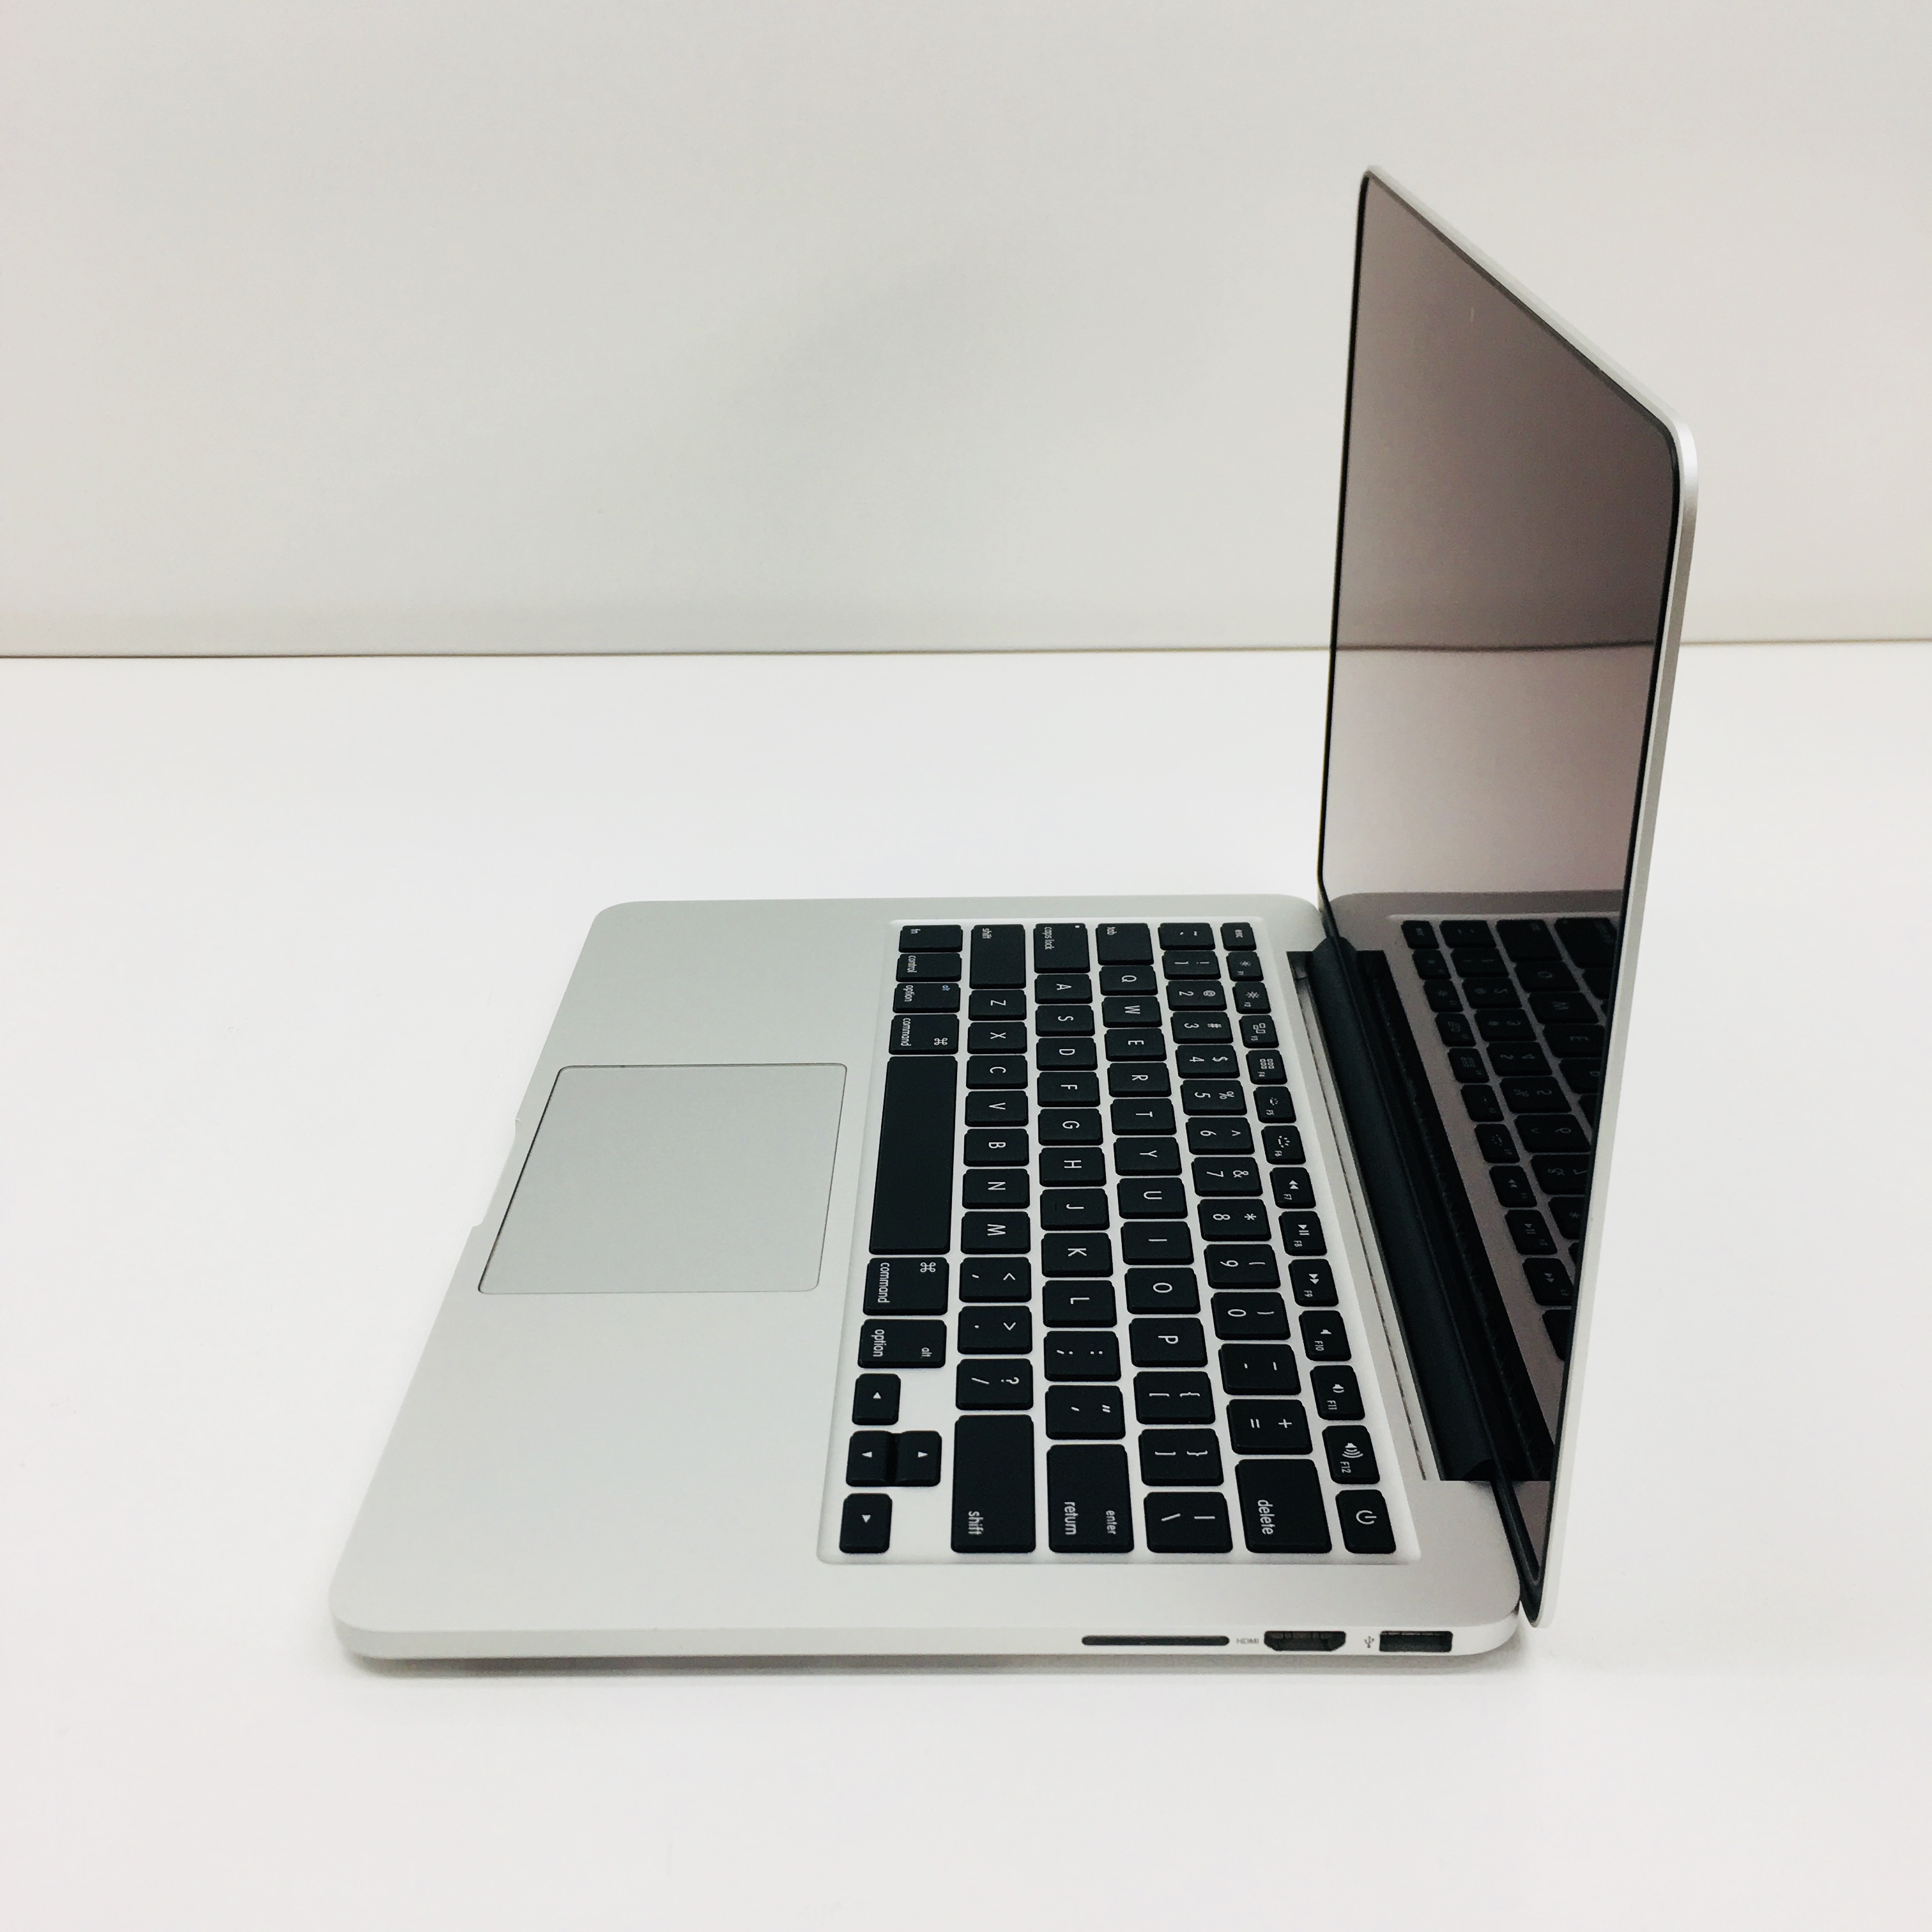 macbook pro mid 2015 refurbished